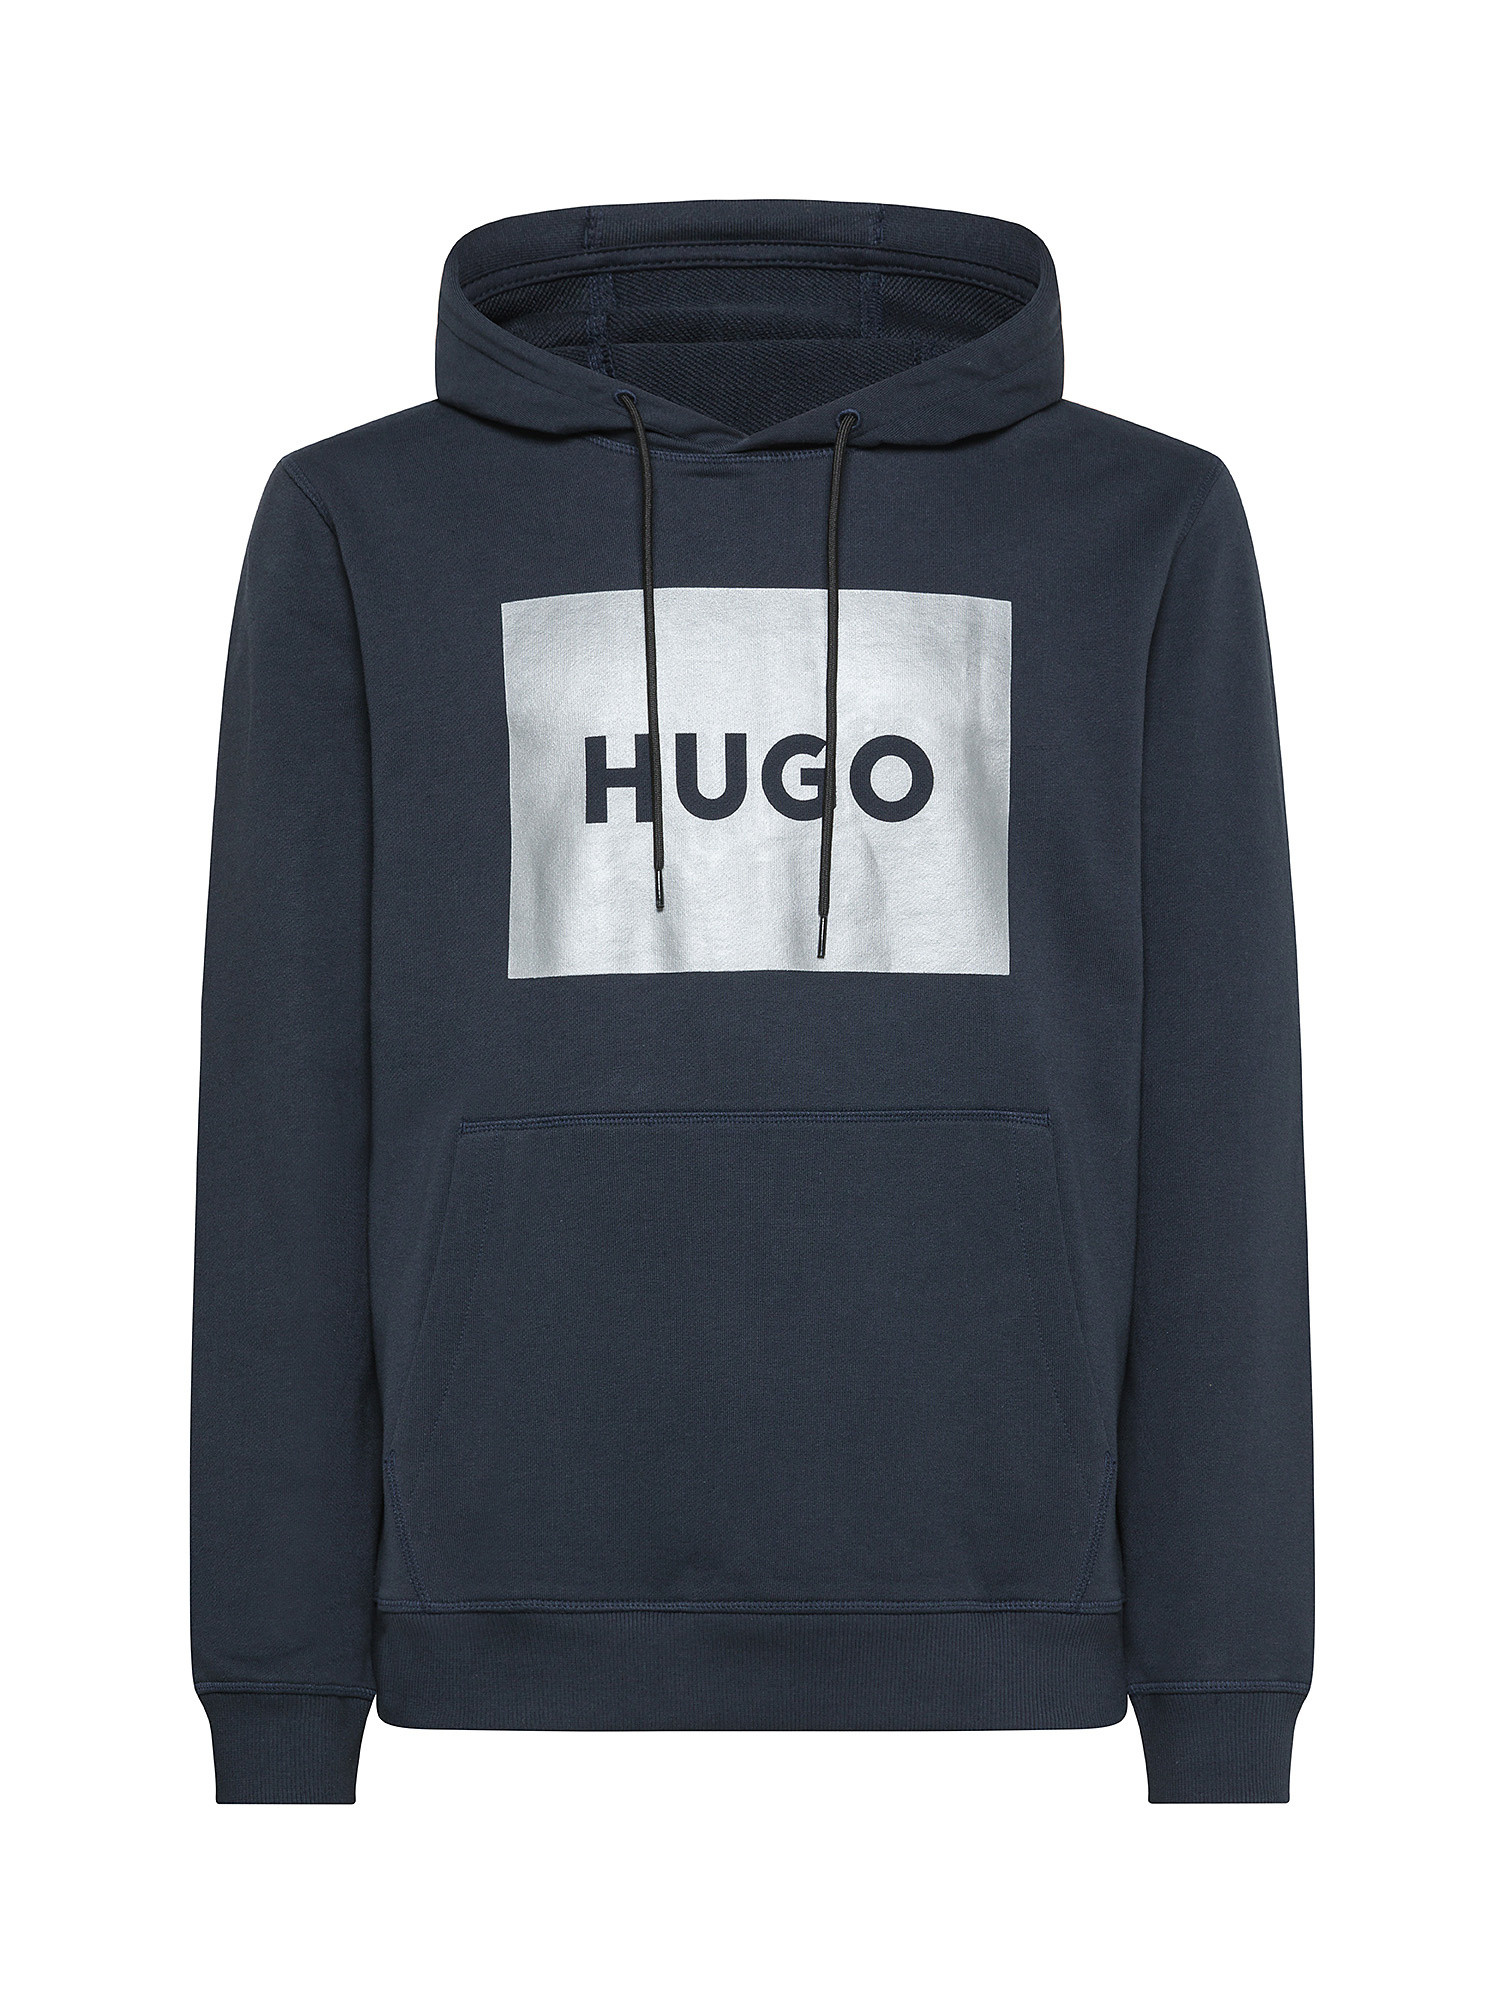 Hugo - Sweatshirt with printed logo in cotton, Dark Blue, large image number 0